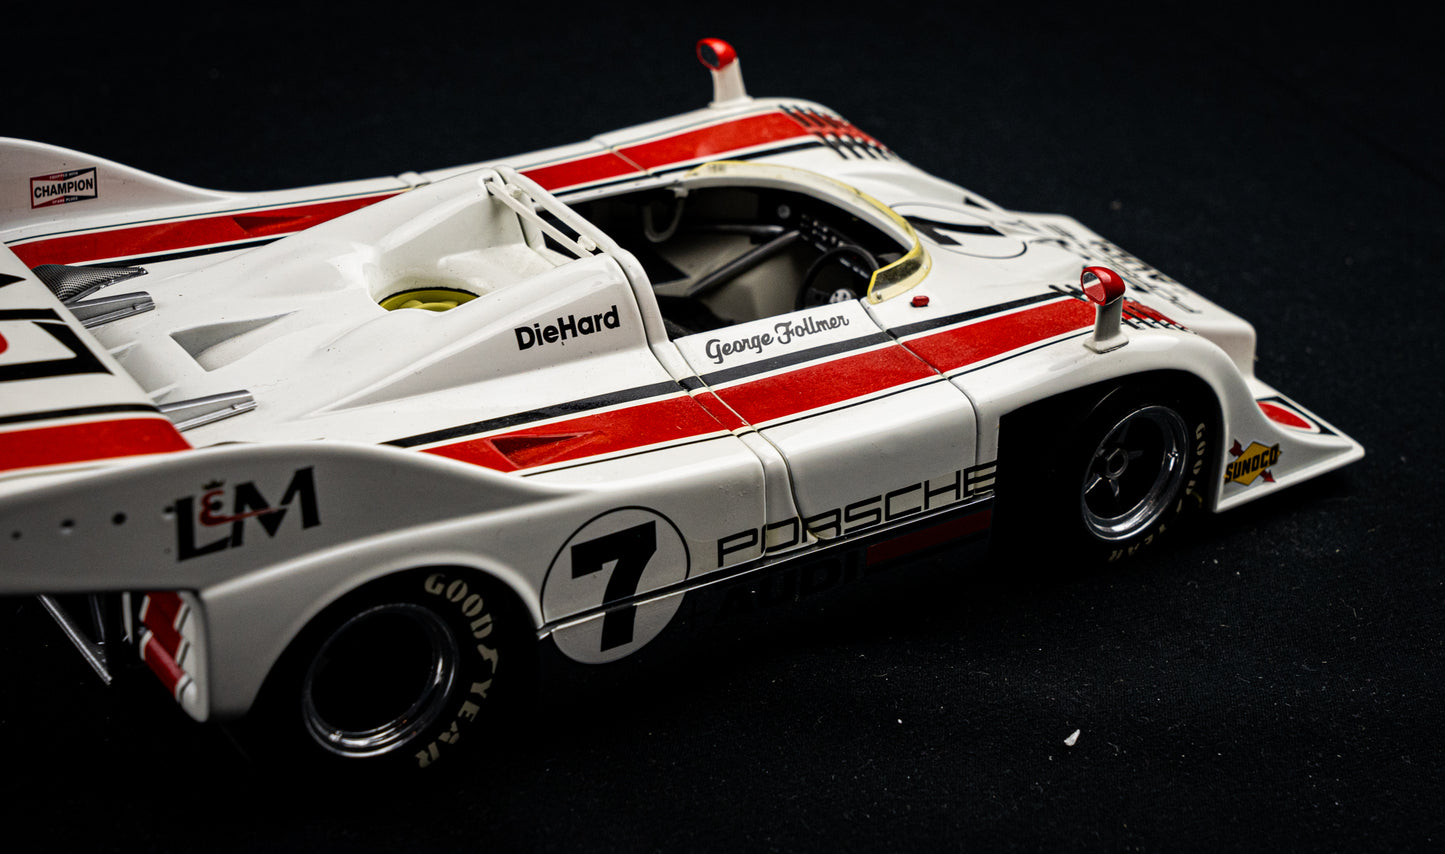 Penske Porsche 917/10 #7 Georg Follmer - L&M Can Am Champion 1972 - sehr selten